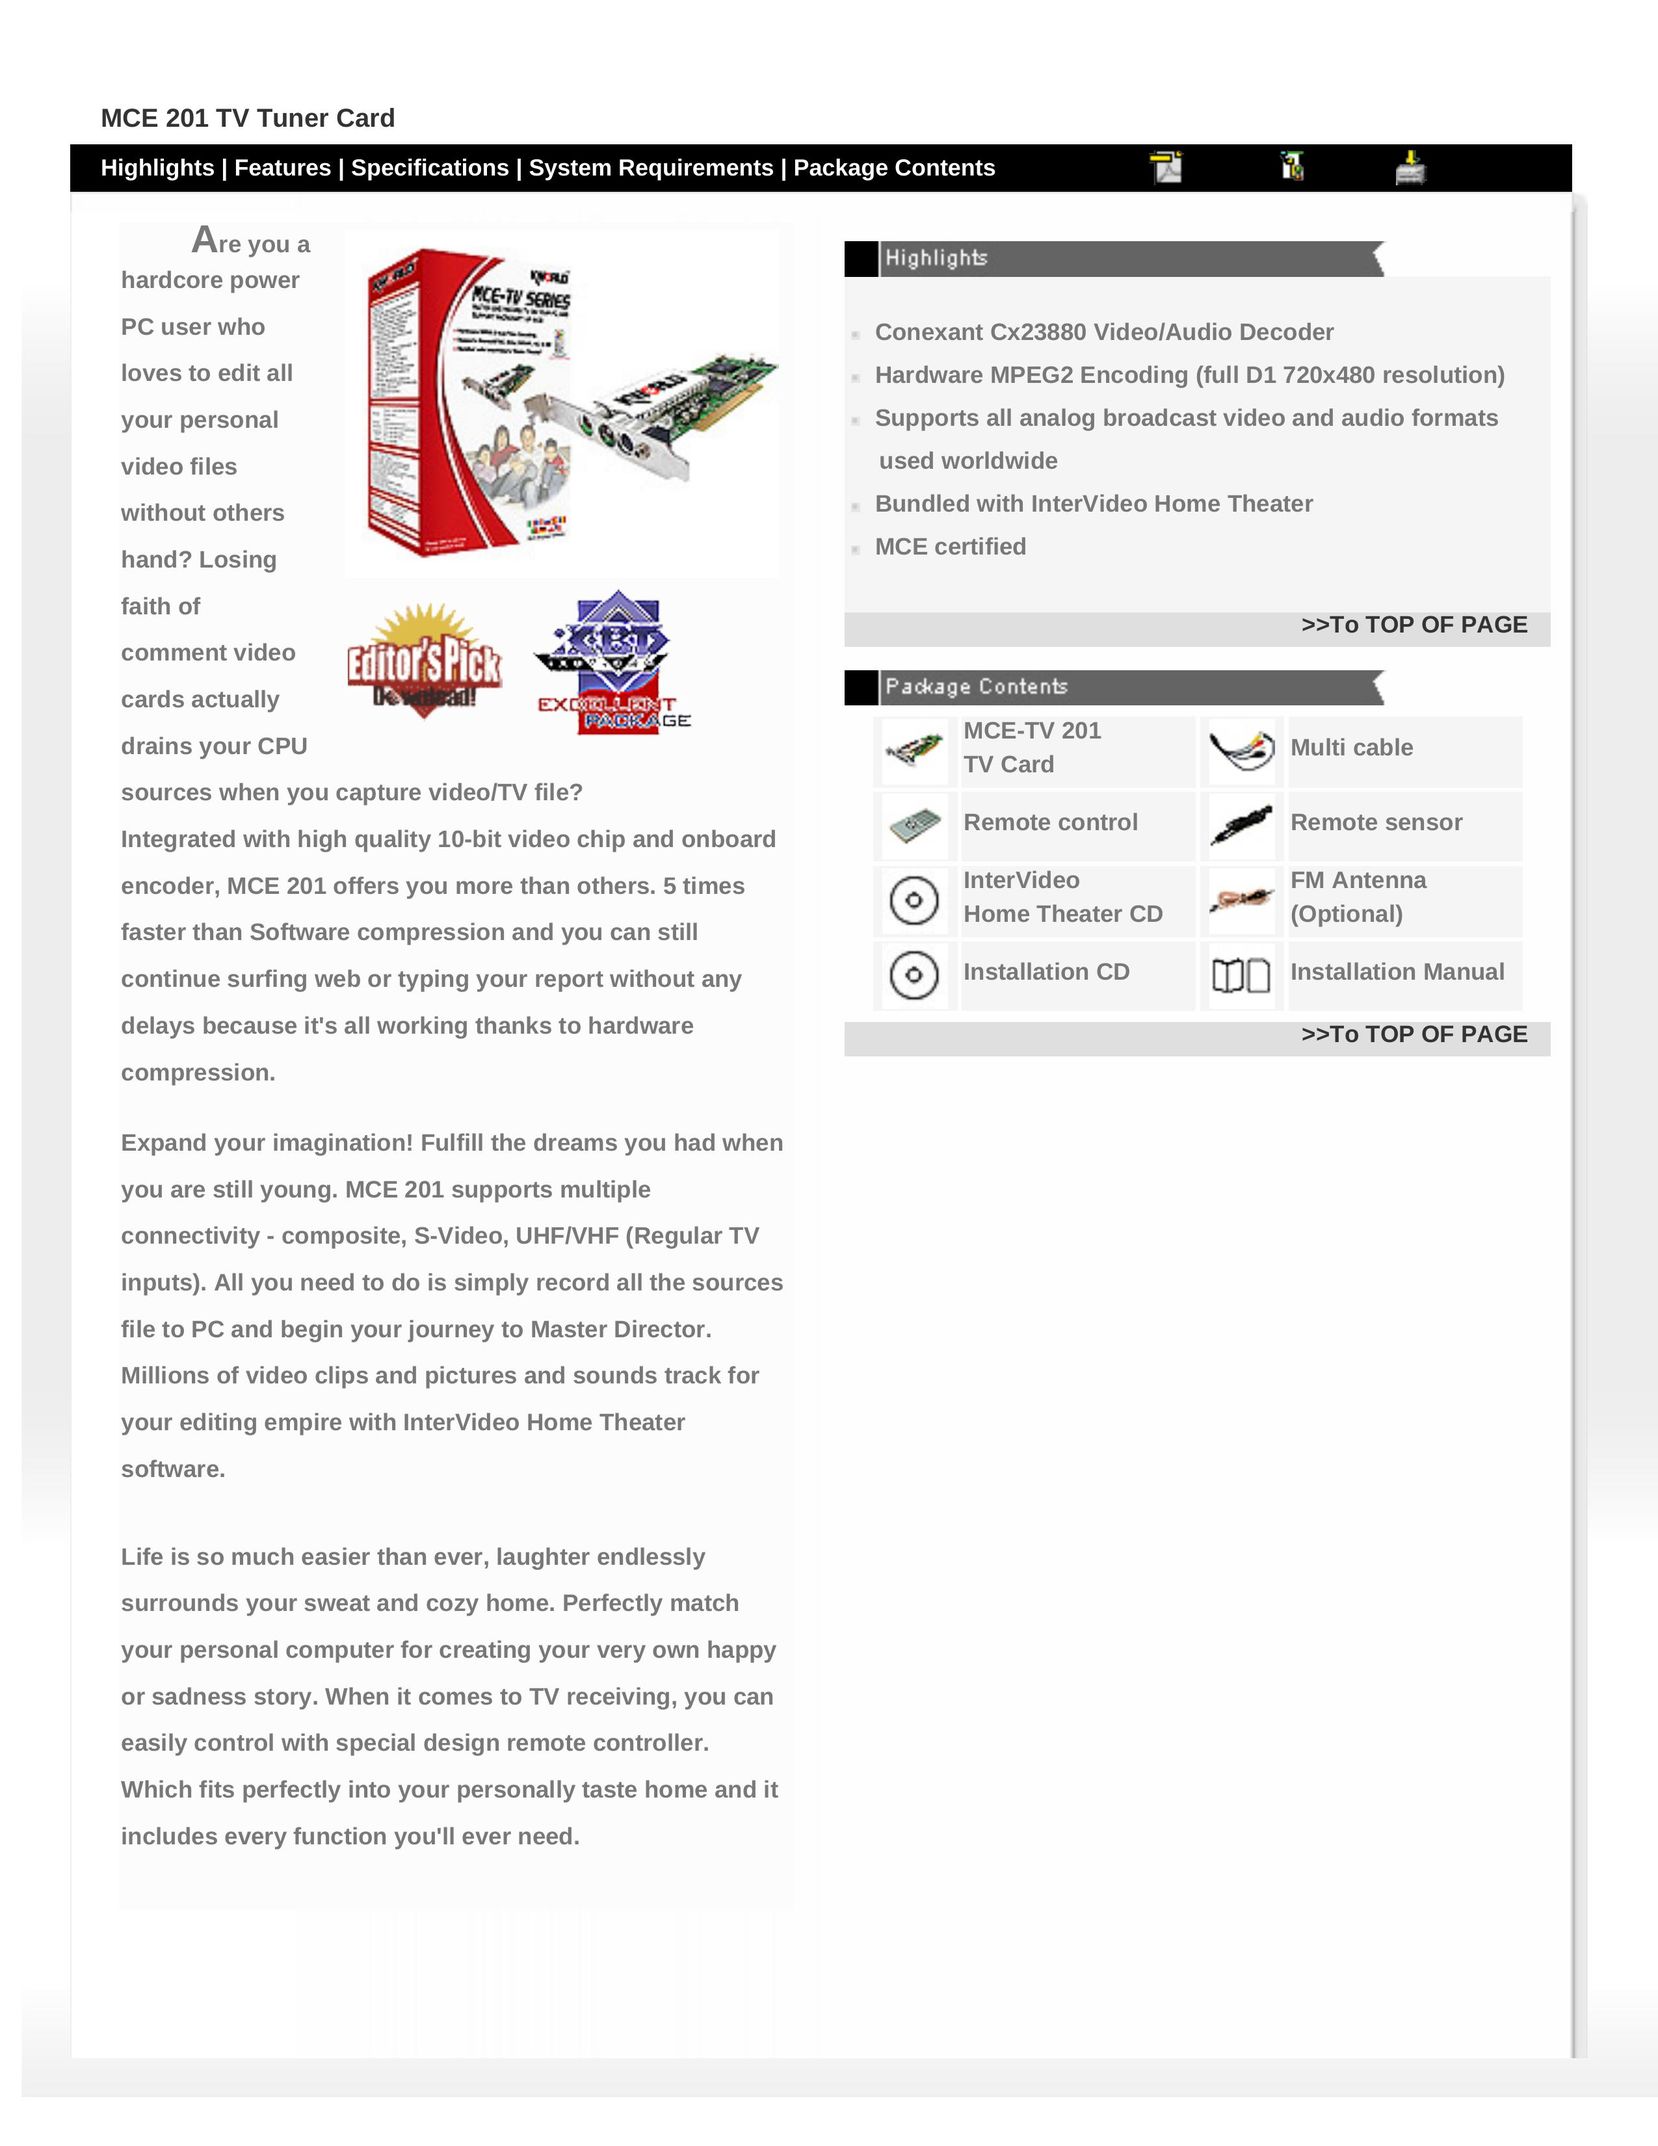 MCE Technologies MCE 201 TV Receiver User Manual